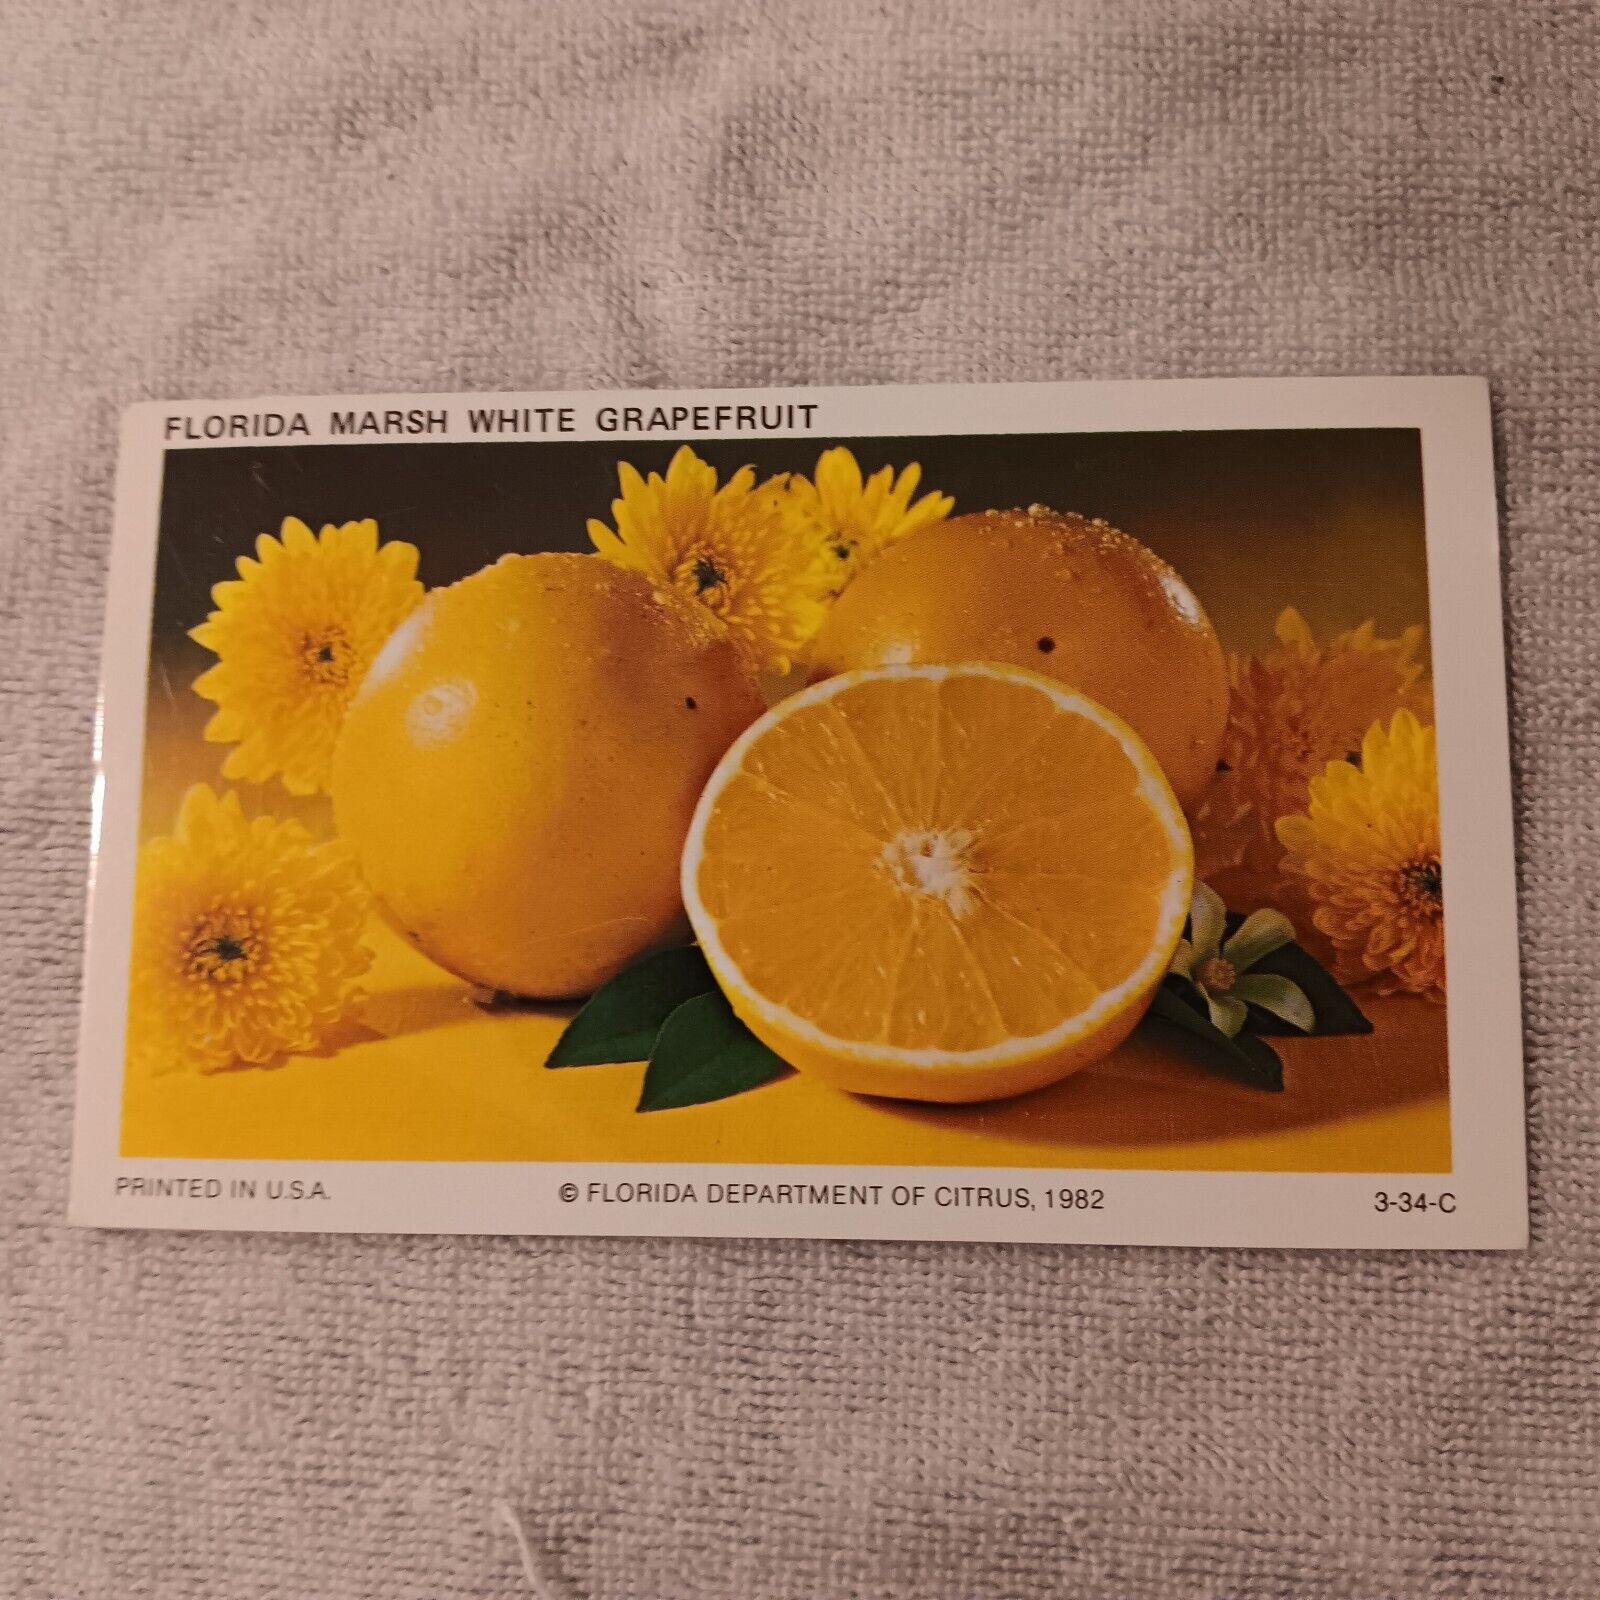 Vintage Postcard Florida Marsh White Grapefruit Unposted Printed USA 3-34-C